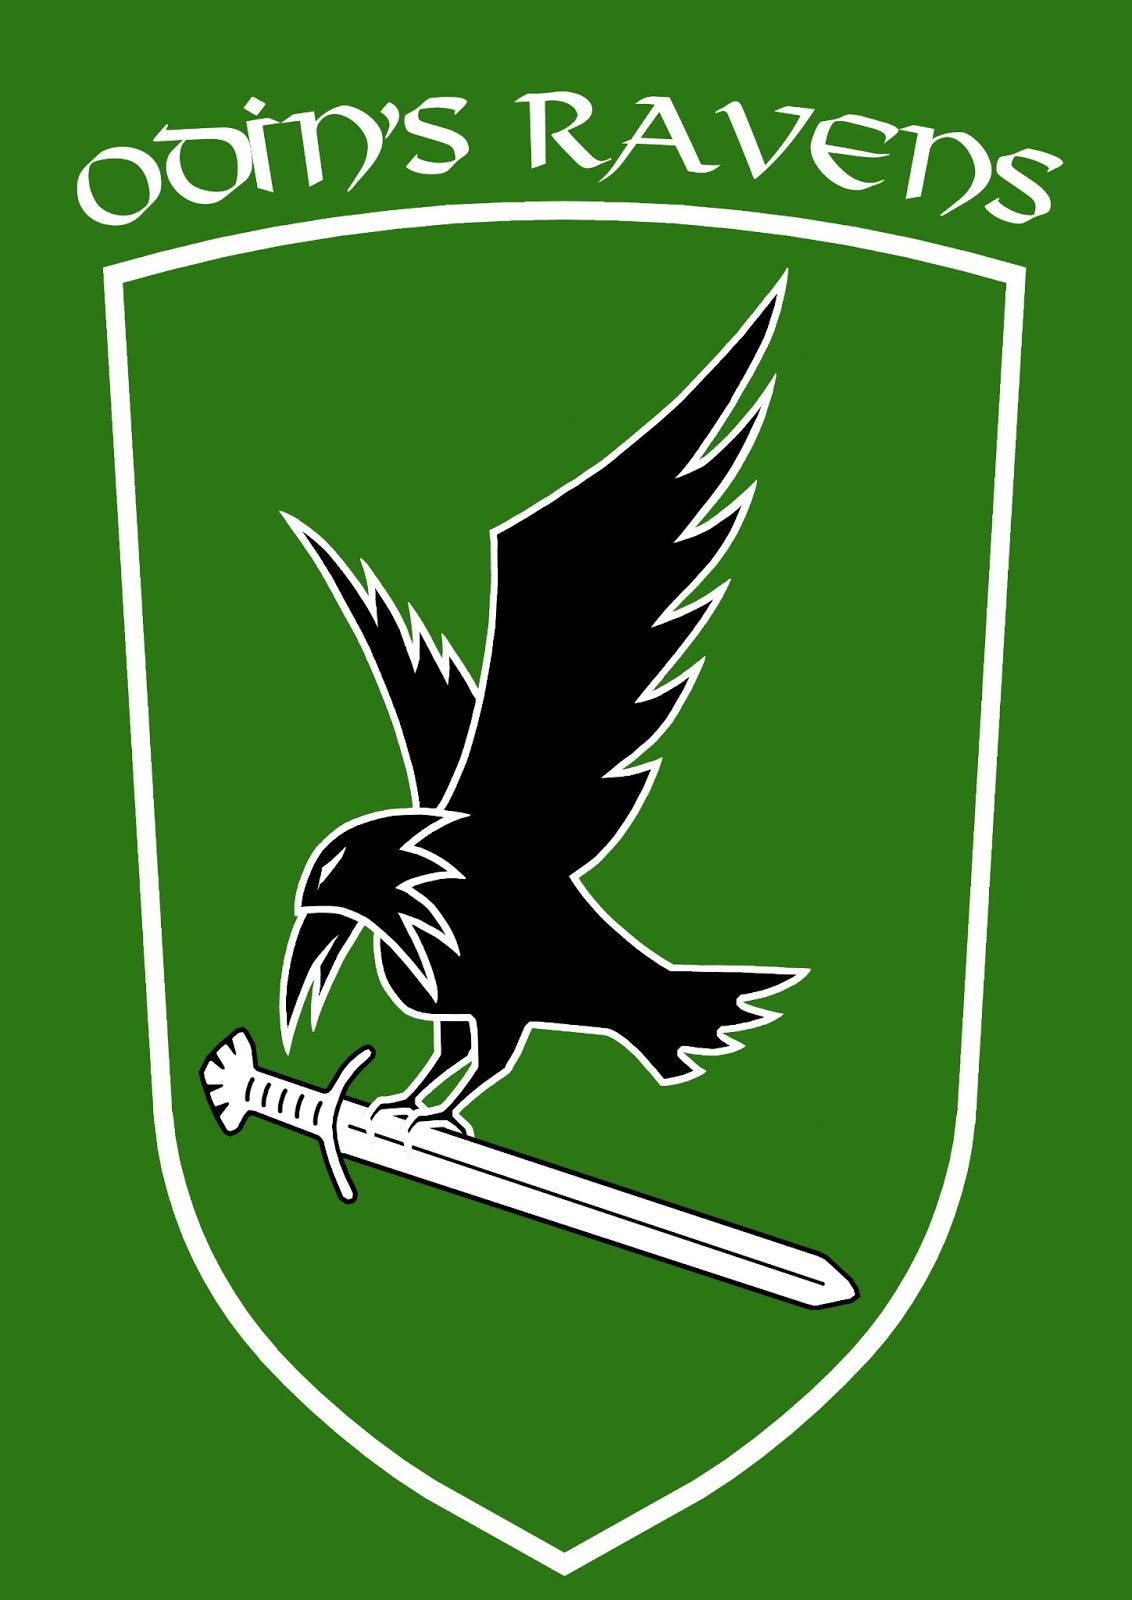 Skilfngheim Odins+ravens_logo+heraldico